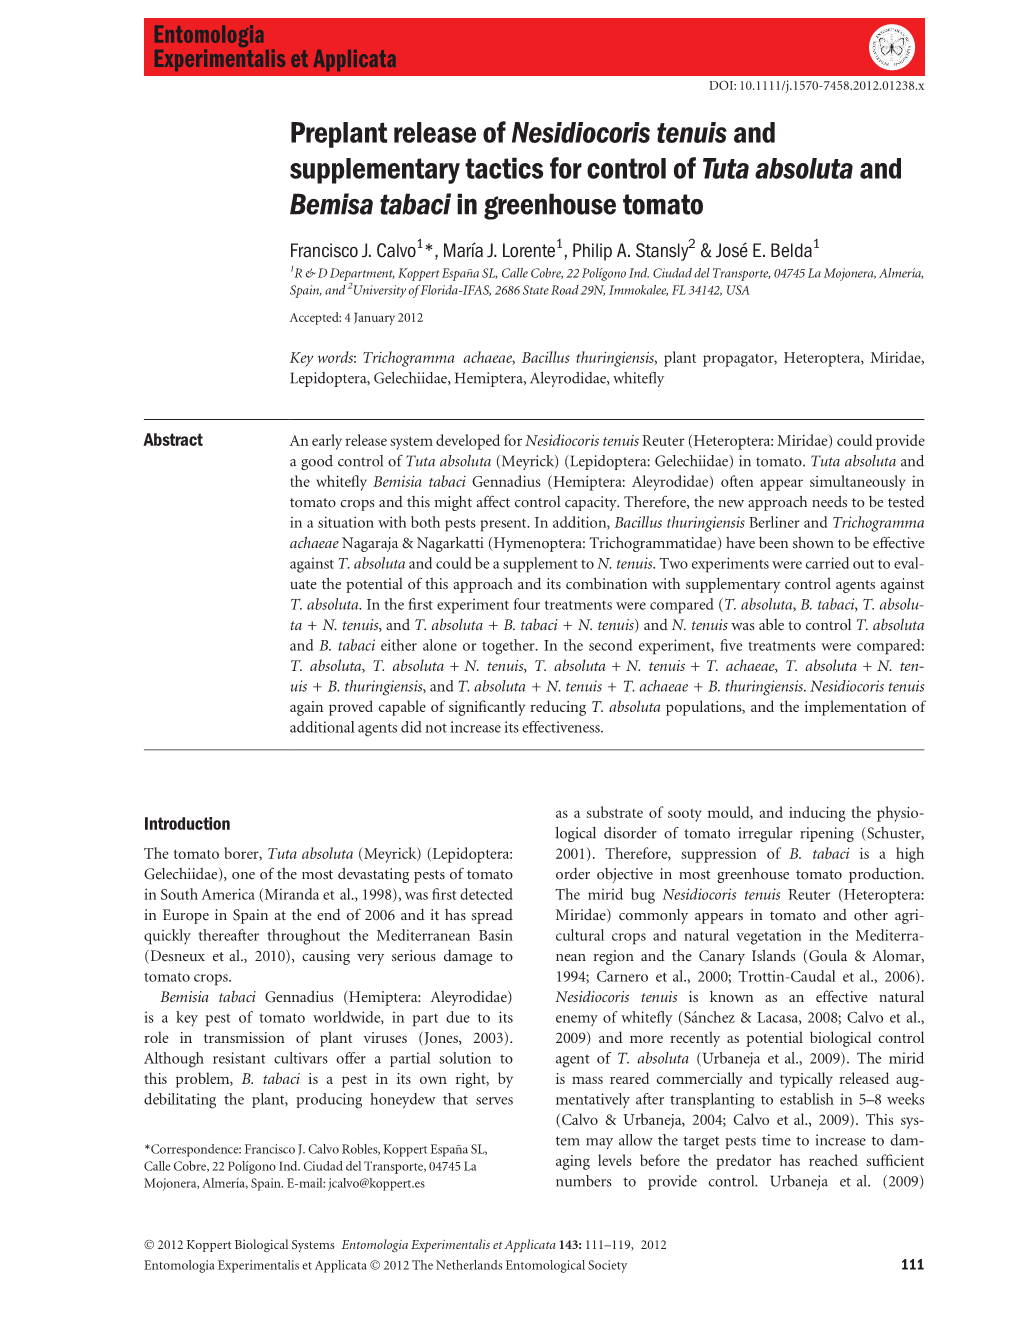 Preplant Release of Nesidiocoris Tenuis and Supplementary Tactics for Control of Tuta Absoluta and Bemisa Tabaci in Greenhouse Tomato